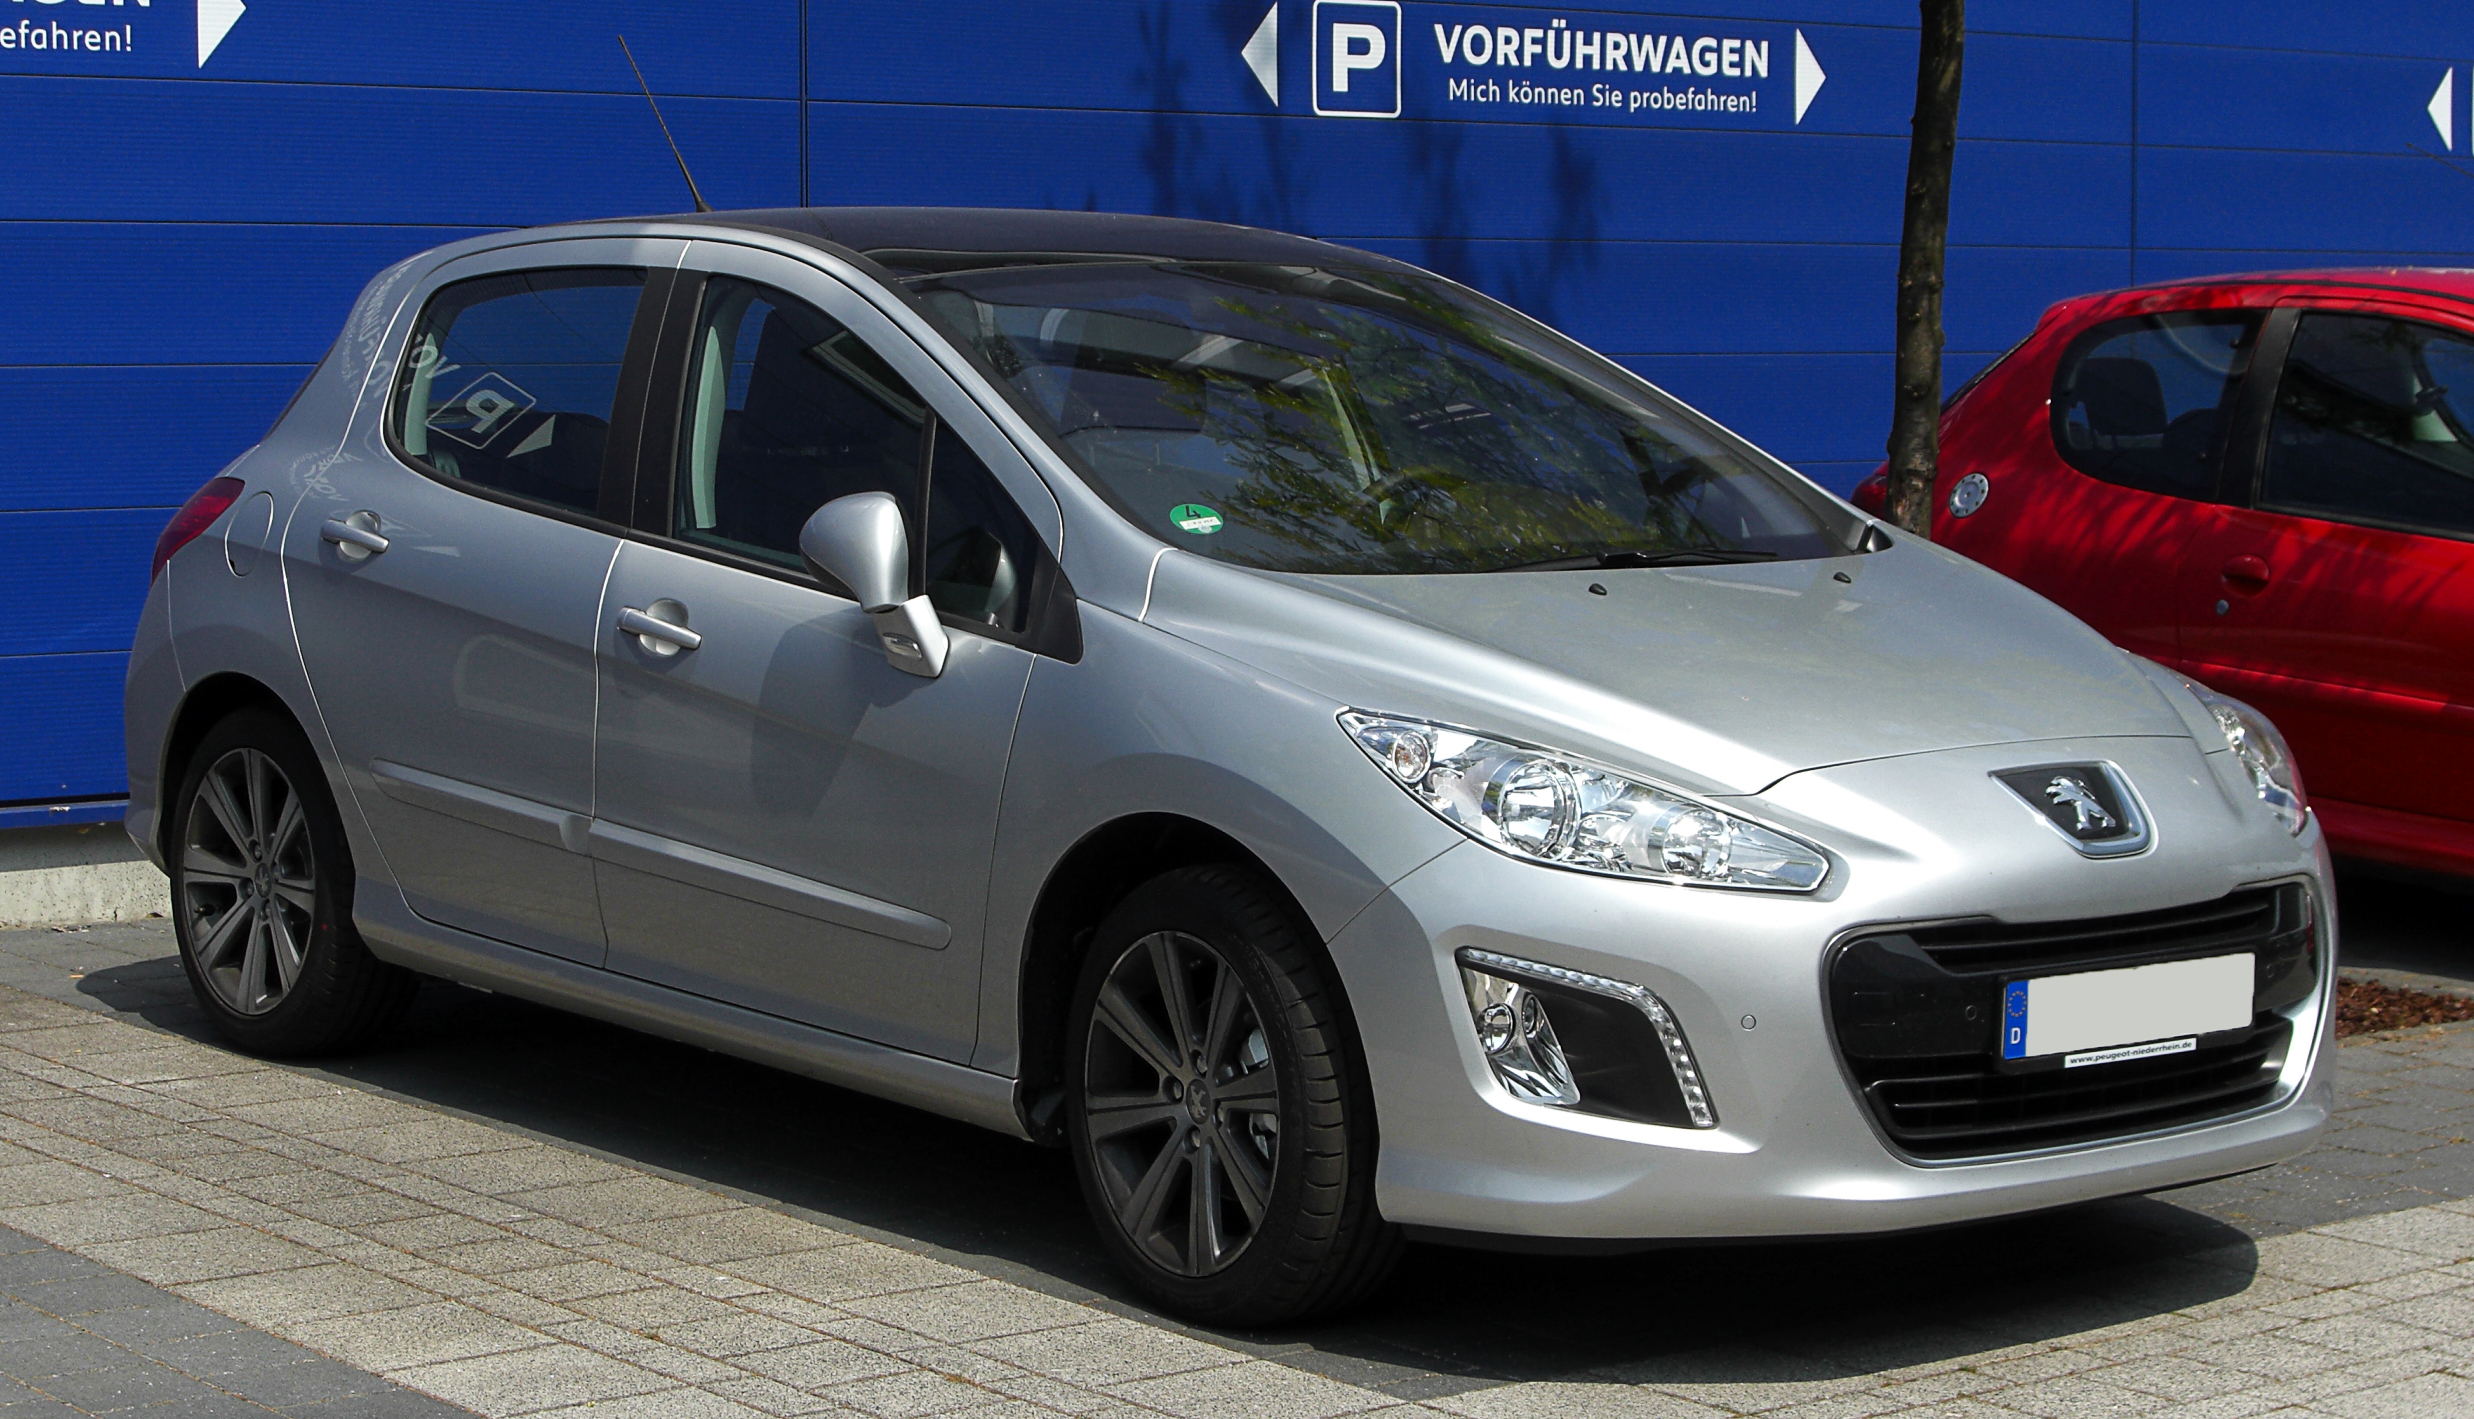 Peugeot_308_(Facelift)_%E2%80%93_Frontansicht,_21._Mai_2011,_D%C3%BCsseldorf.jpg